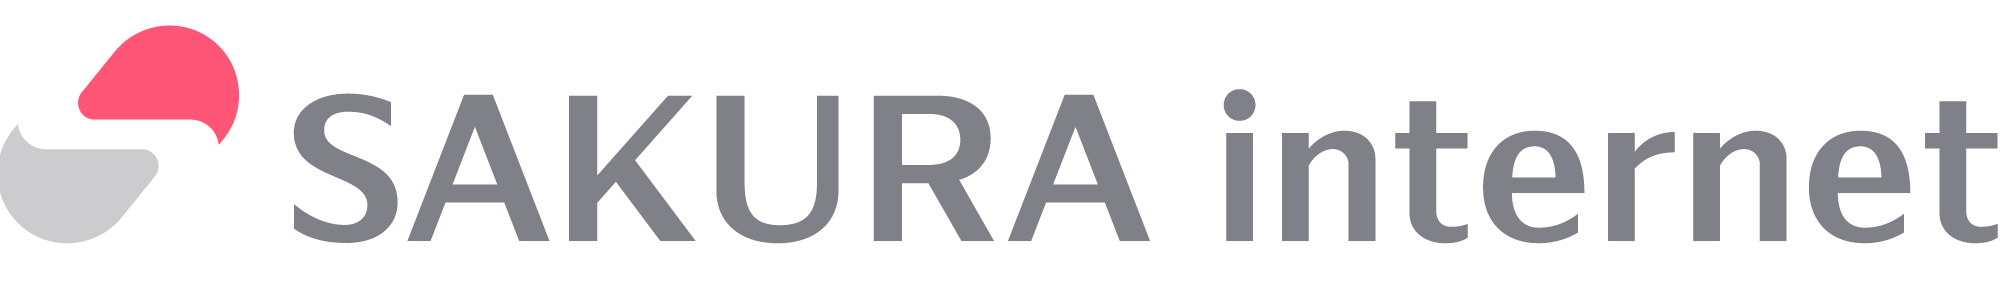 SAKURA internet Logo